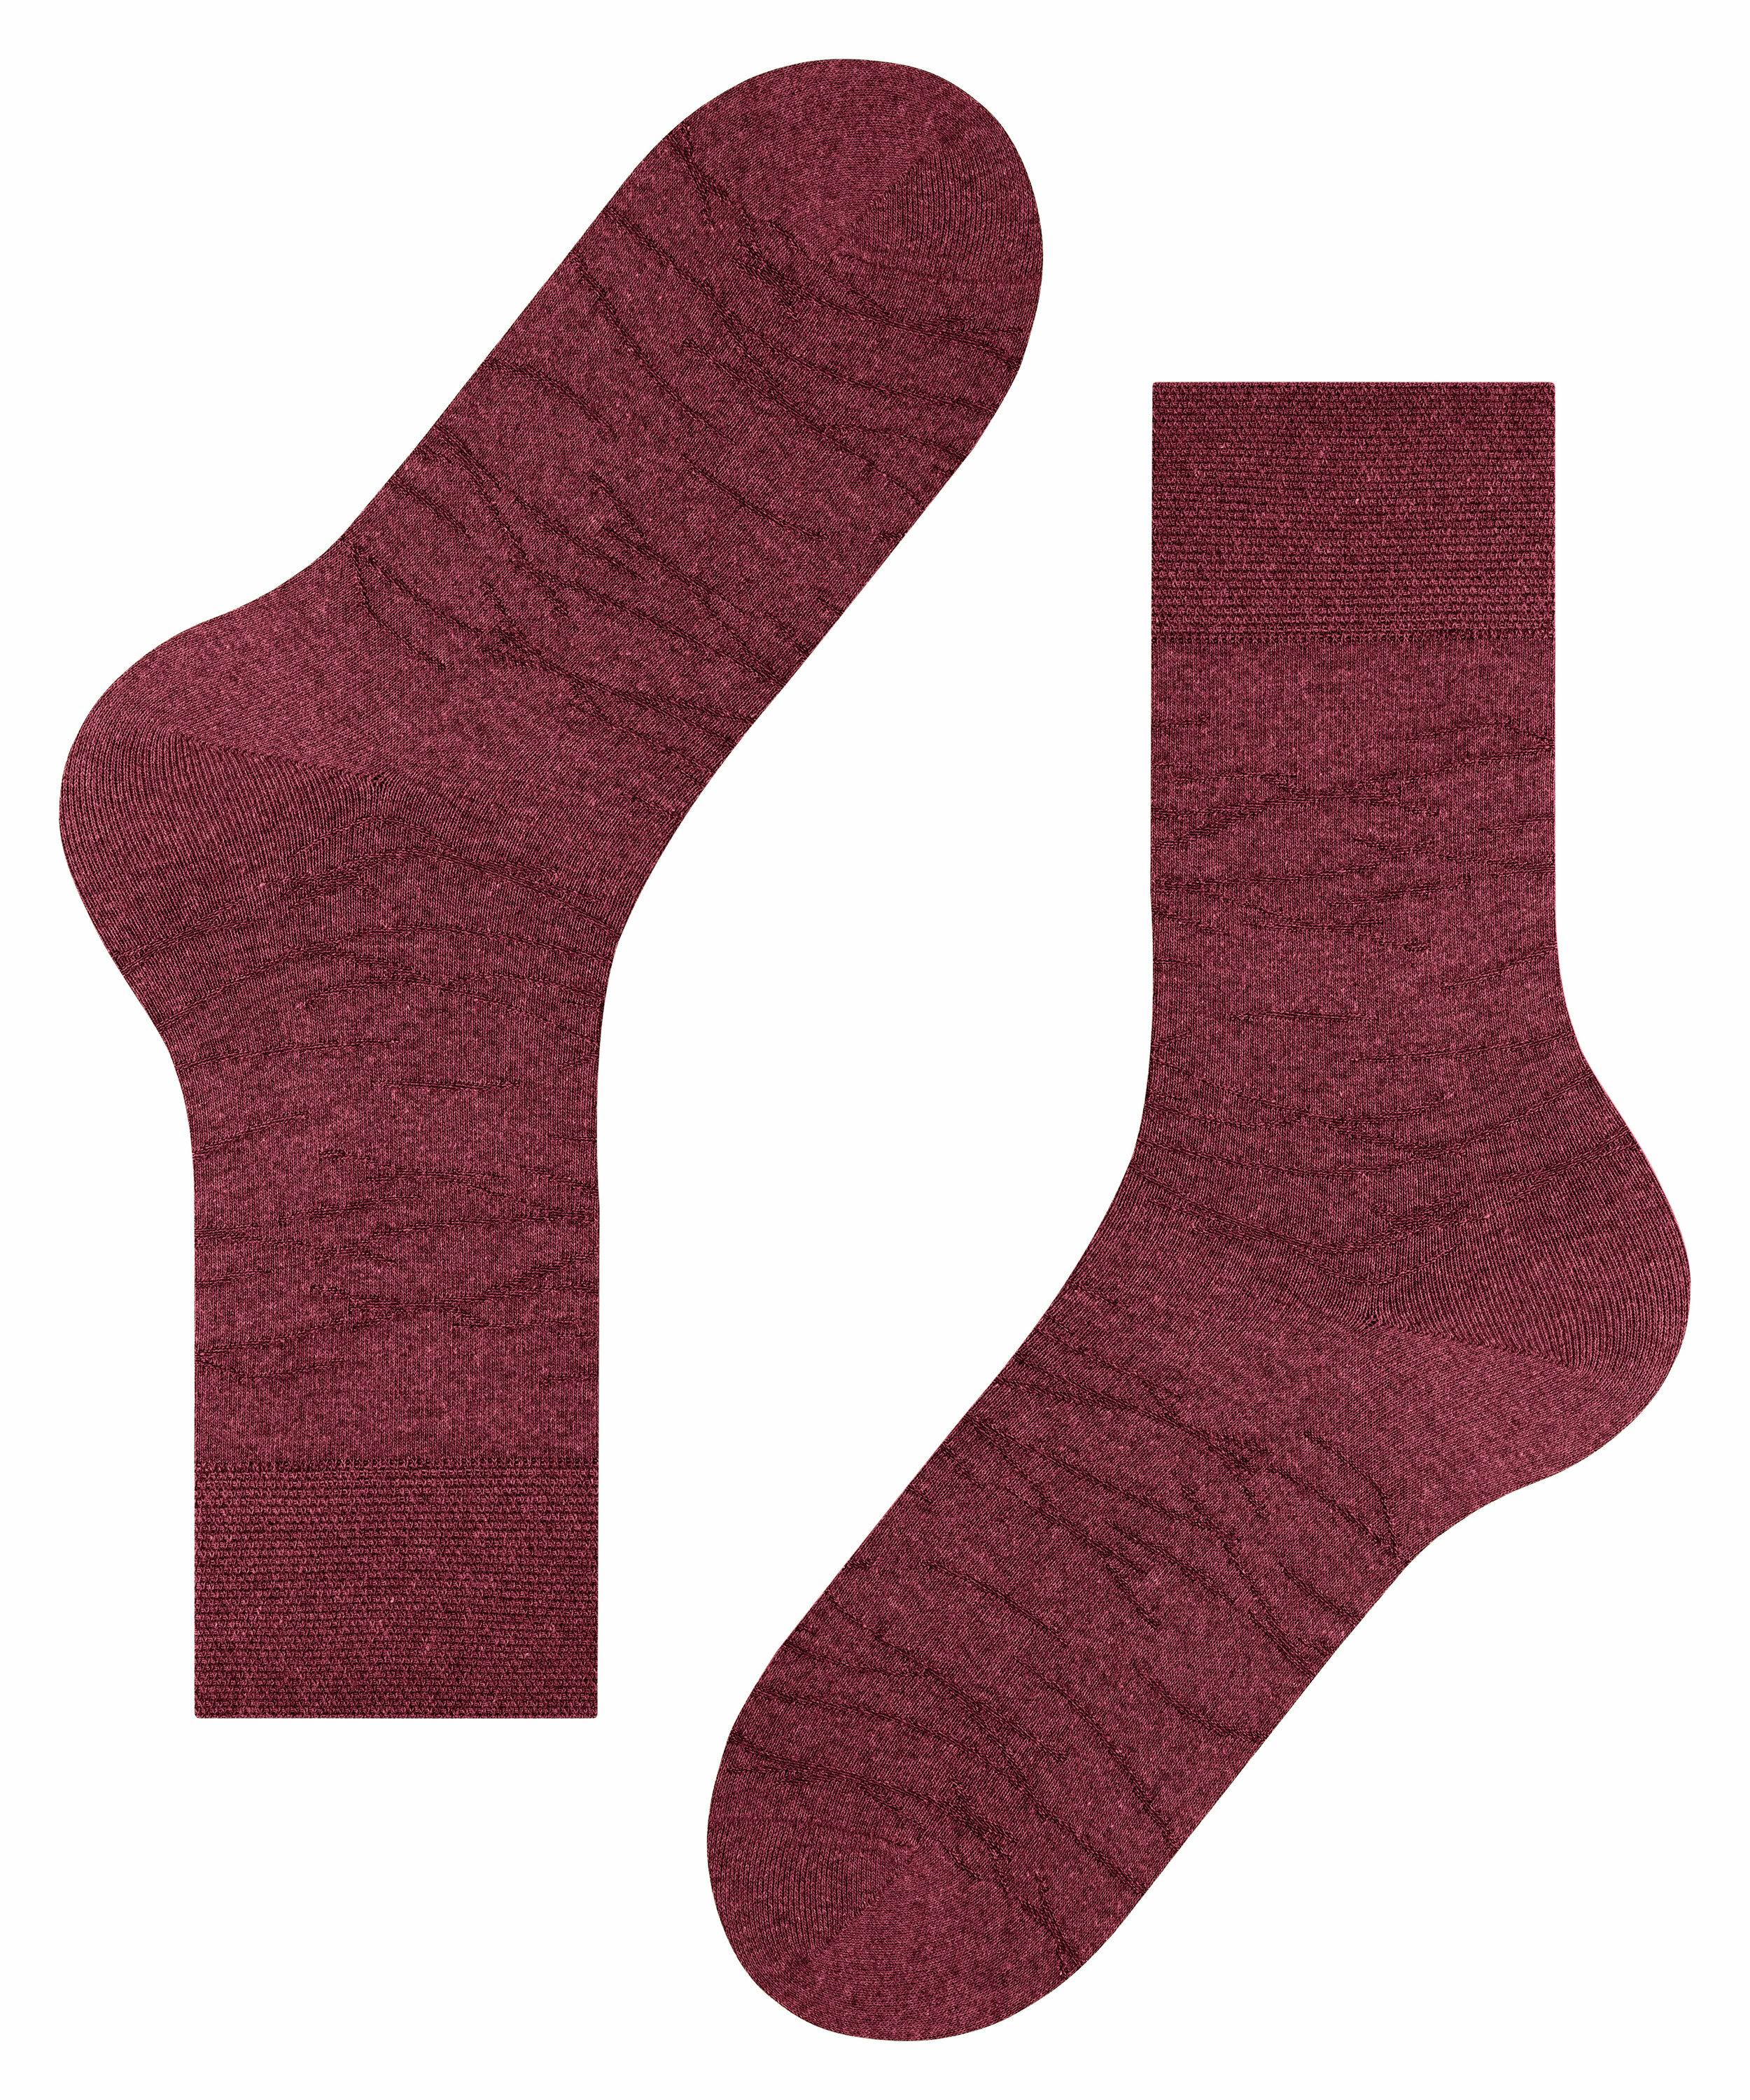 FALKE Sensitive Plant Soft Herren Socken, 39-42, Rot, Baumwolle, 12440-8413 günstig online kaufen